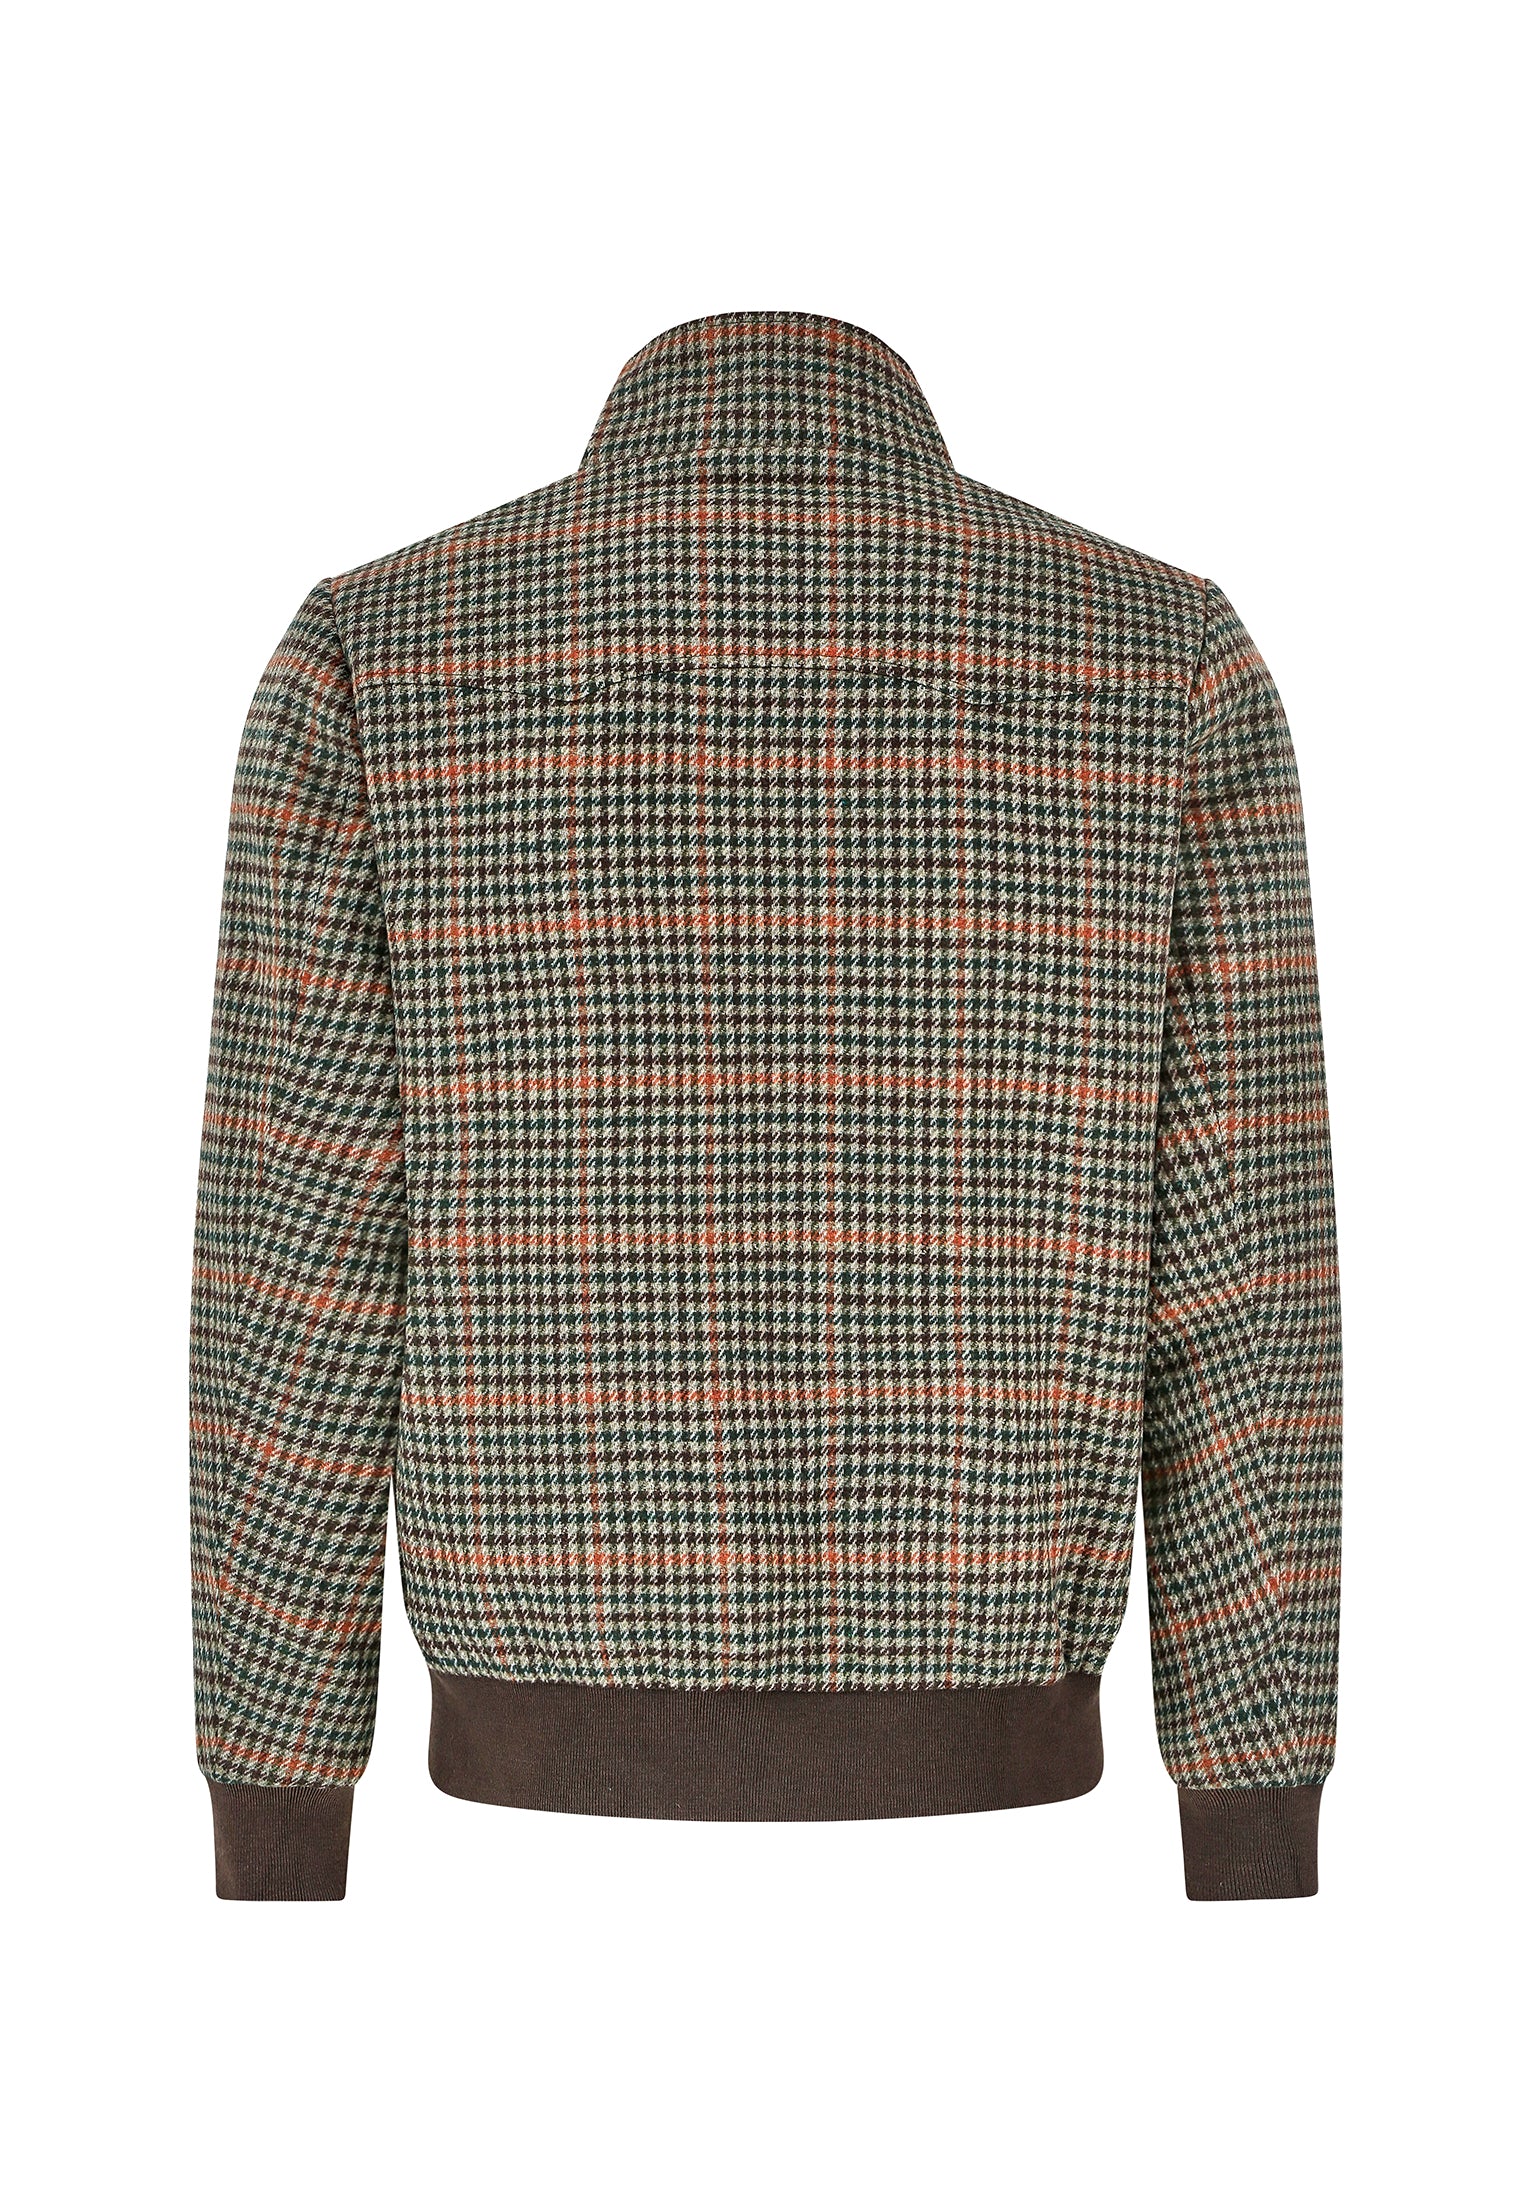 Wool Blend Dogtooth Check Harrington Jacket Back by Merc London